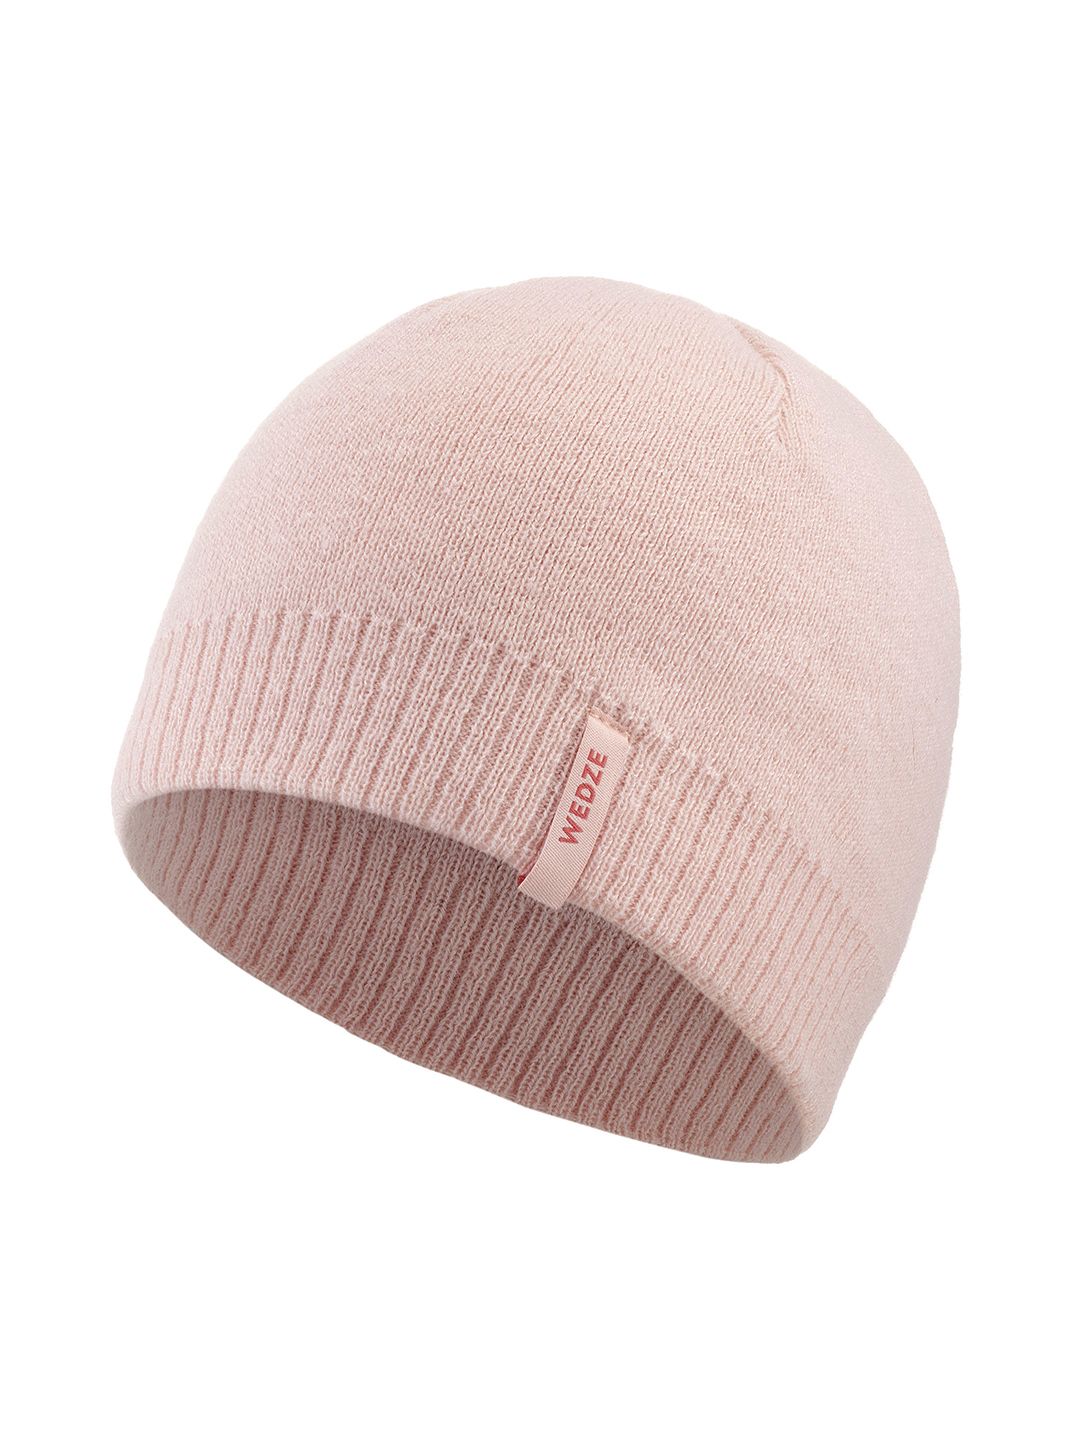 WEDZE By Decathlon Unisex Pink Ski Hat Simple Beanie Price in India